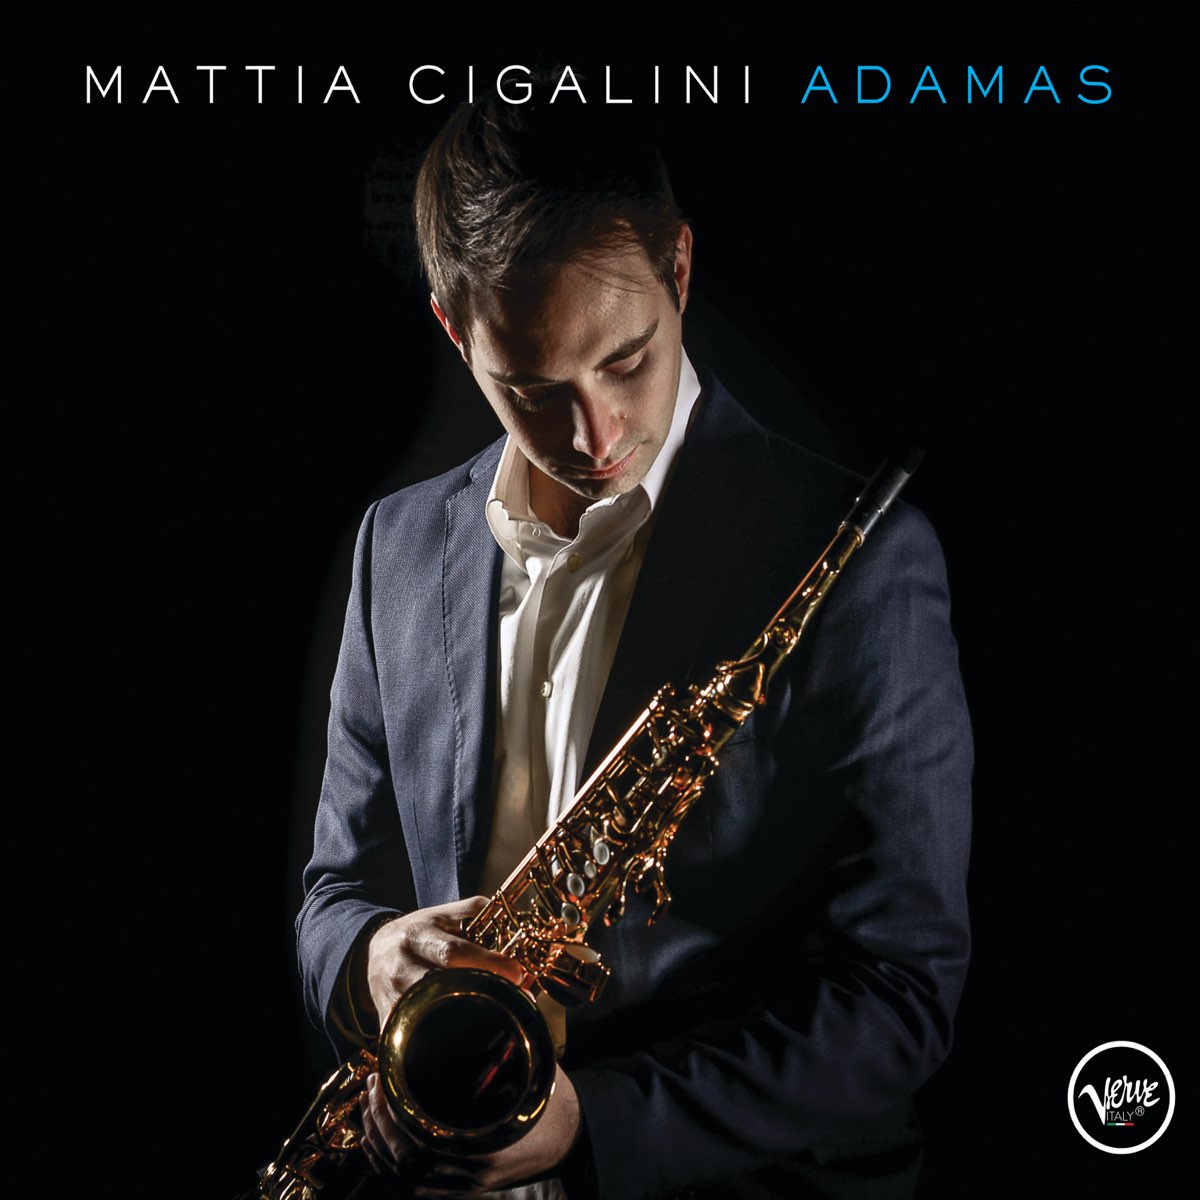 Mattia Cigaliniの「Adamas」をApple Musicで